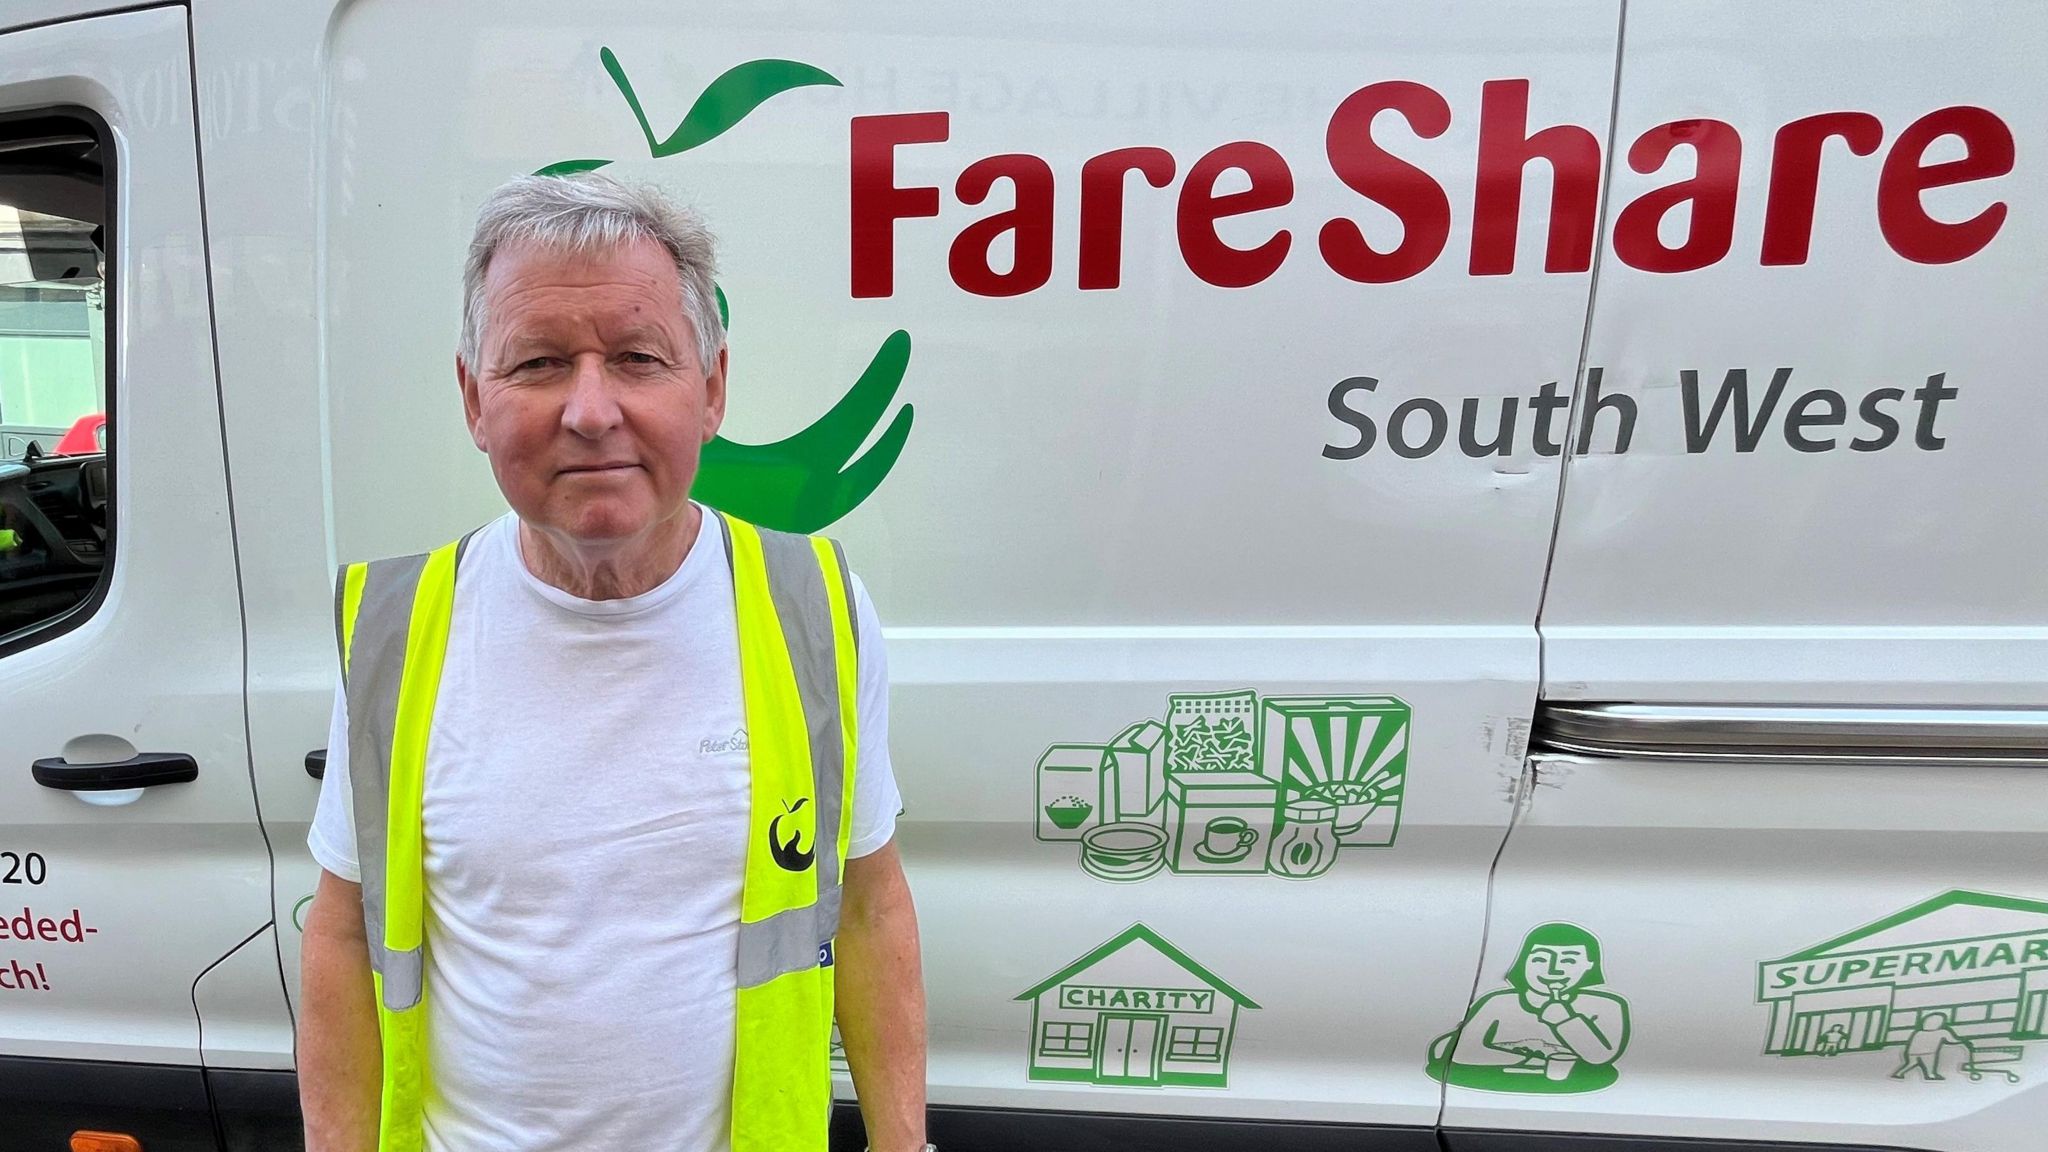 Derek Wood is a volunteer with FareShare South West